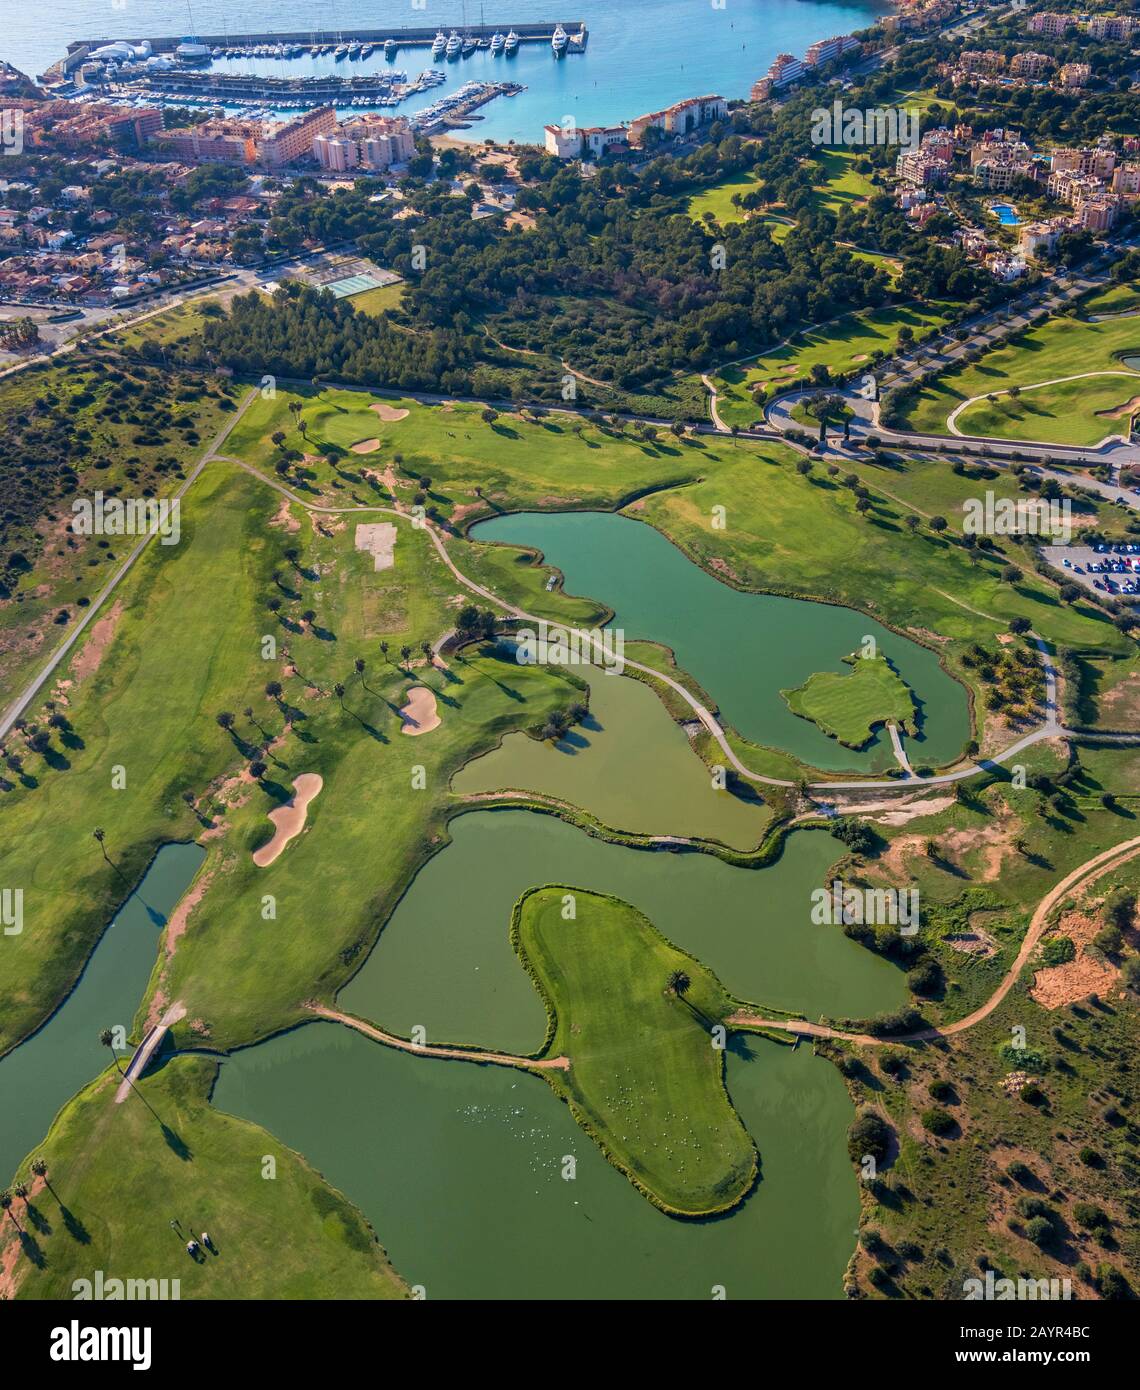 Campo de golf Santa Ponsa II, Port Adriano, 04.01.2020, vista aérea, España, Islas Baleares, Mallorca, Calvia Foto de stock